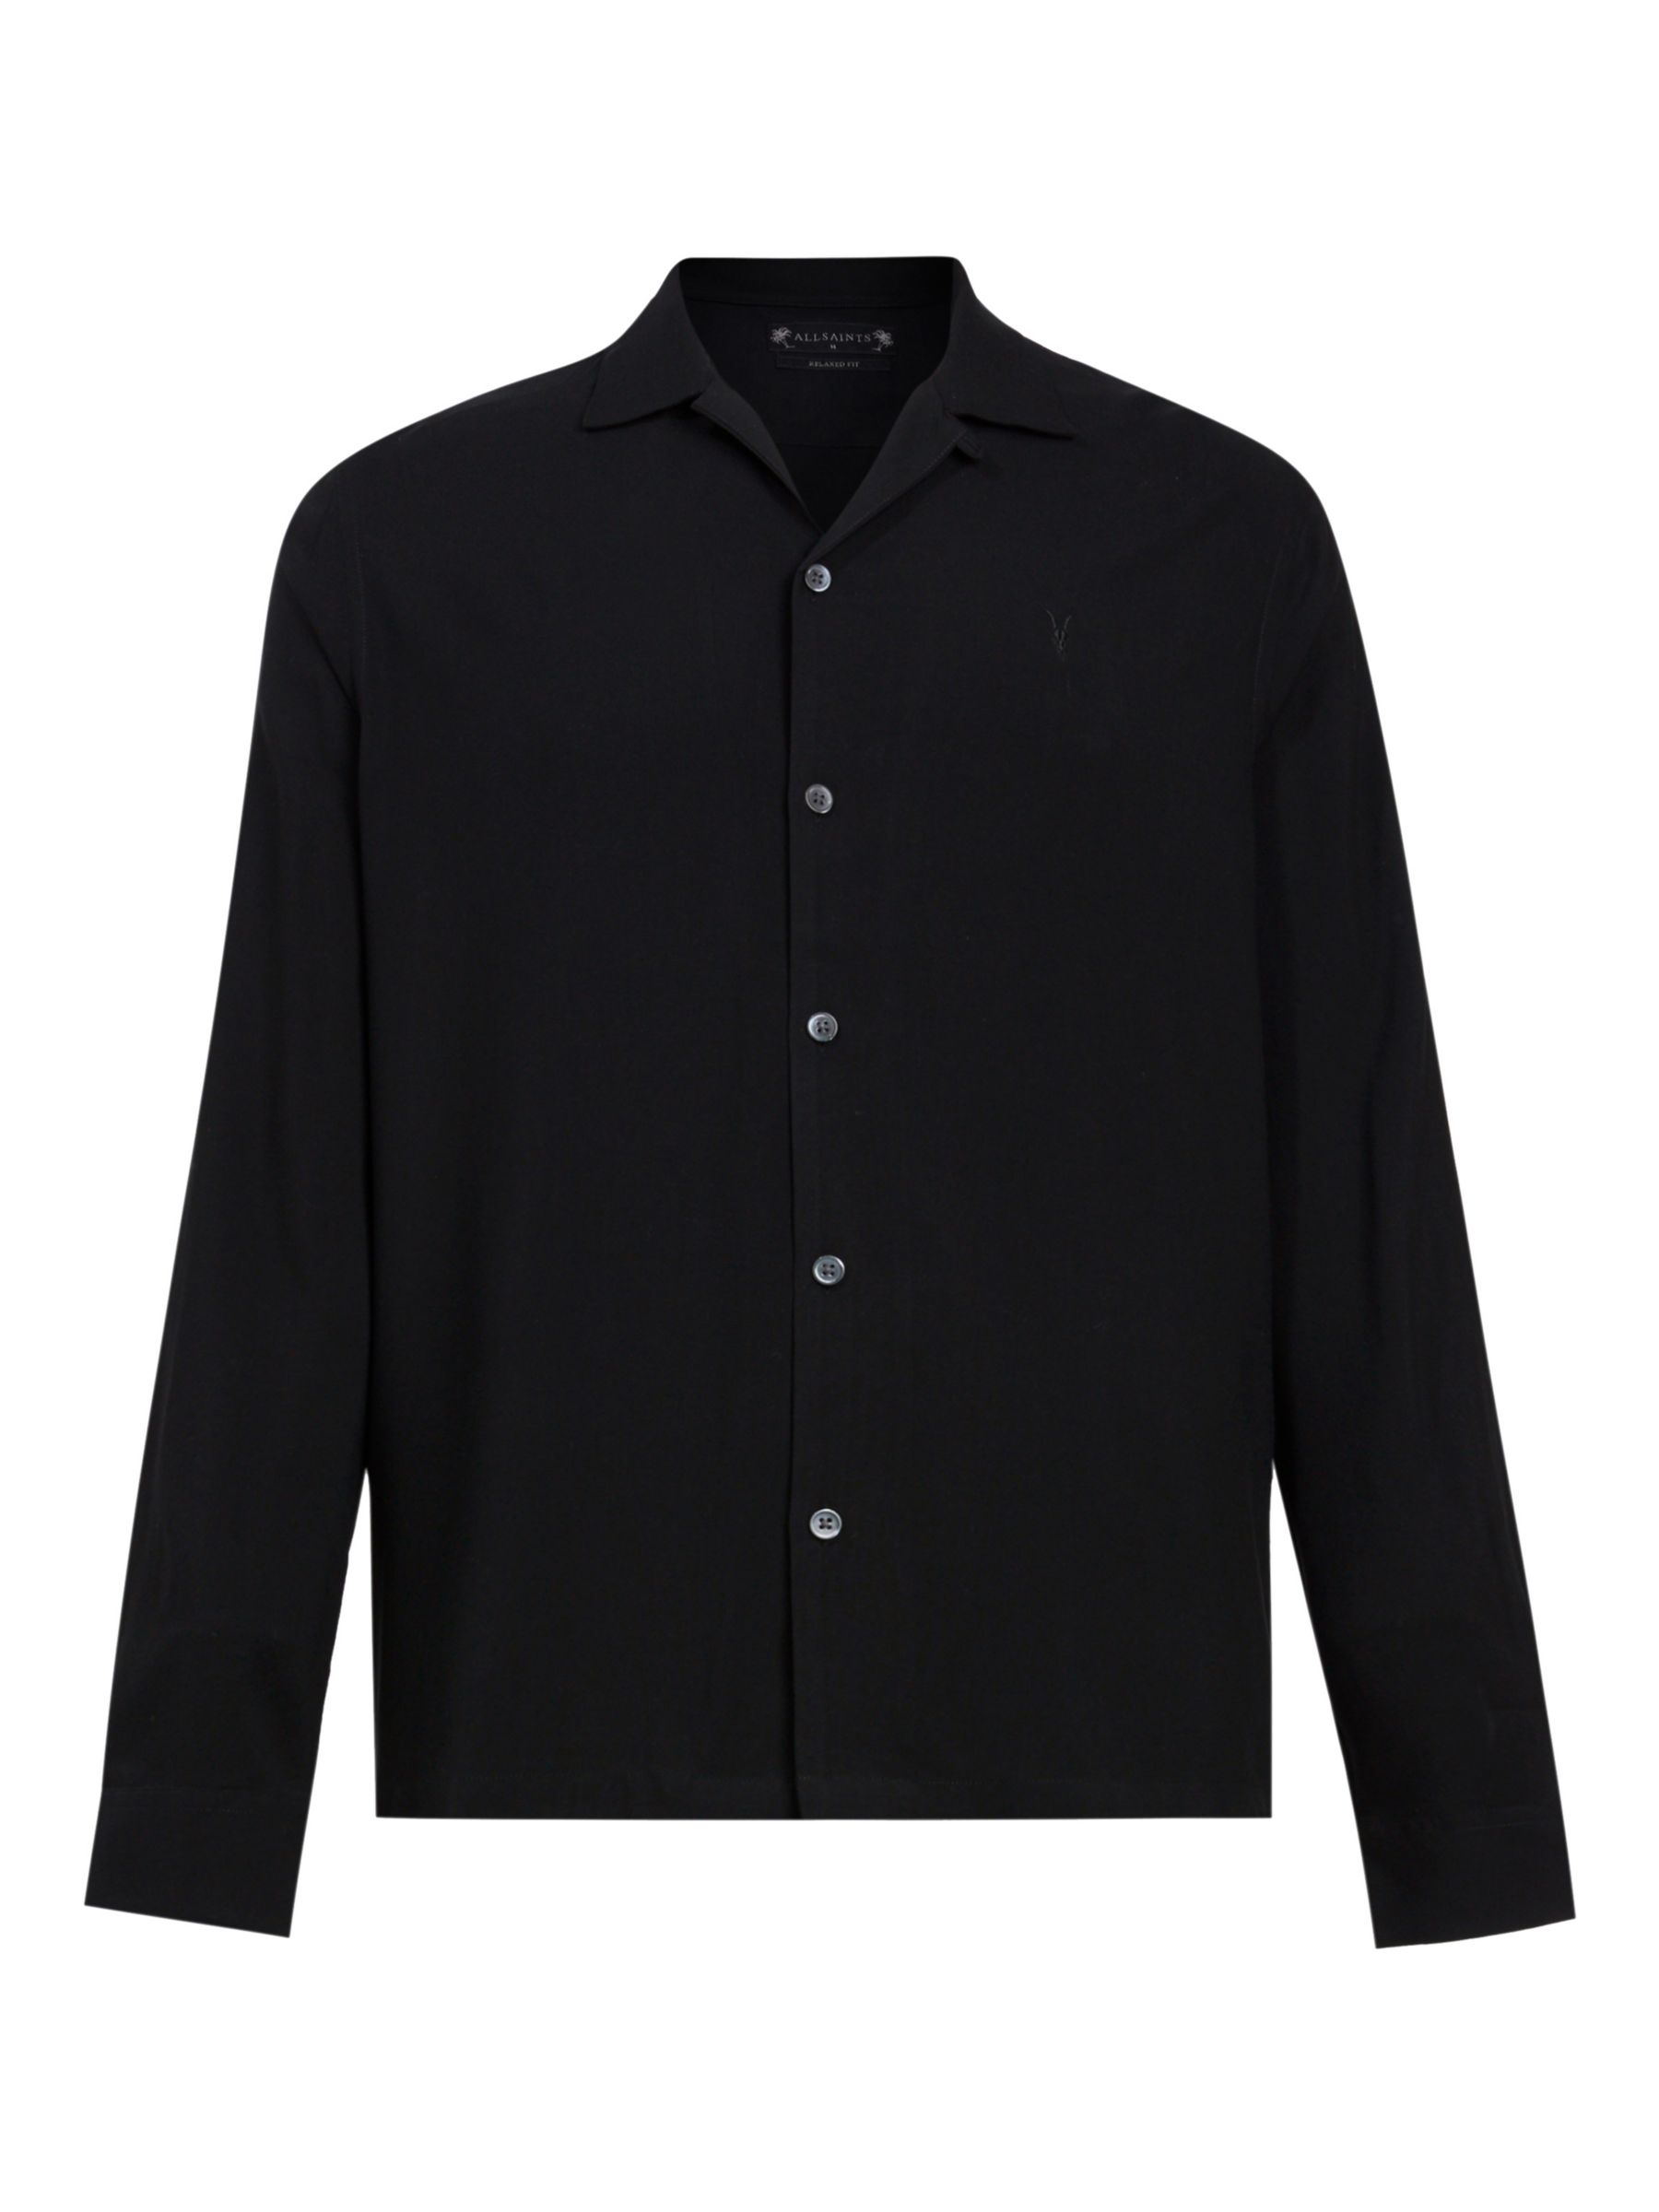 AllSaint Venice Long Sleeve Shirt, Black at John Lewis & Partners